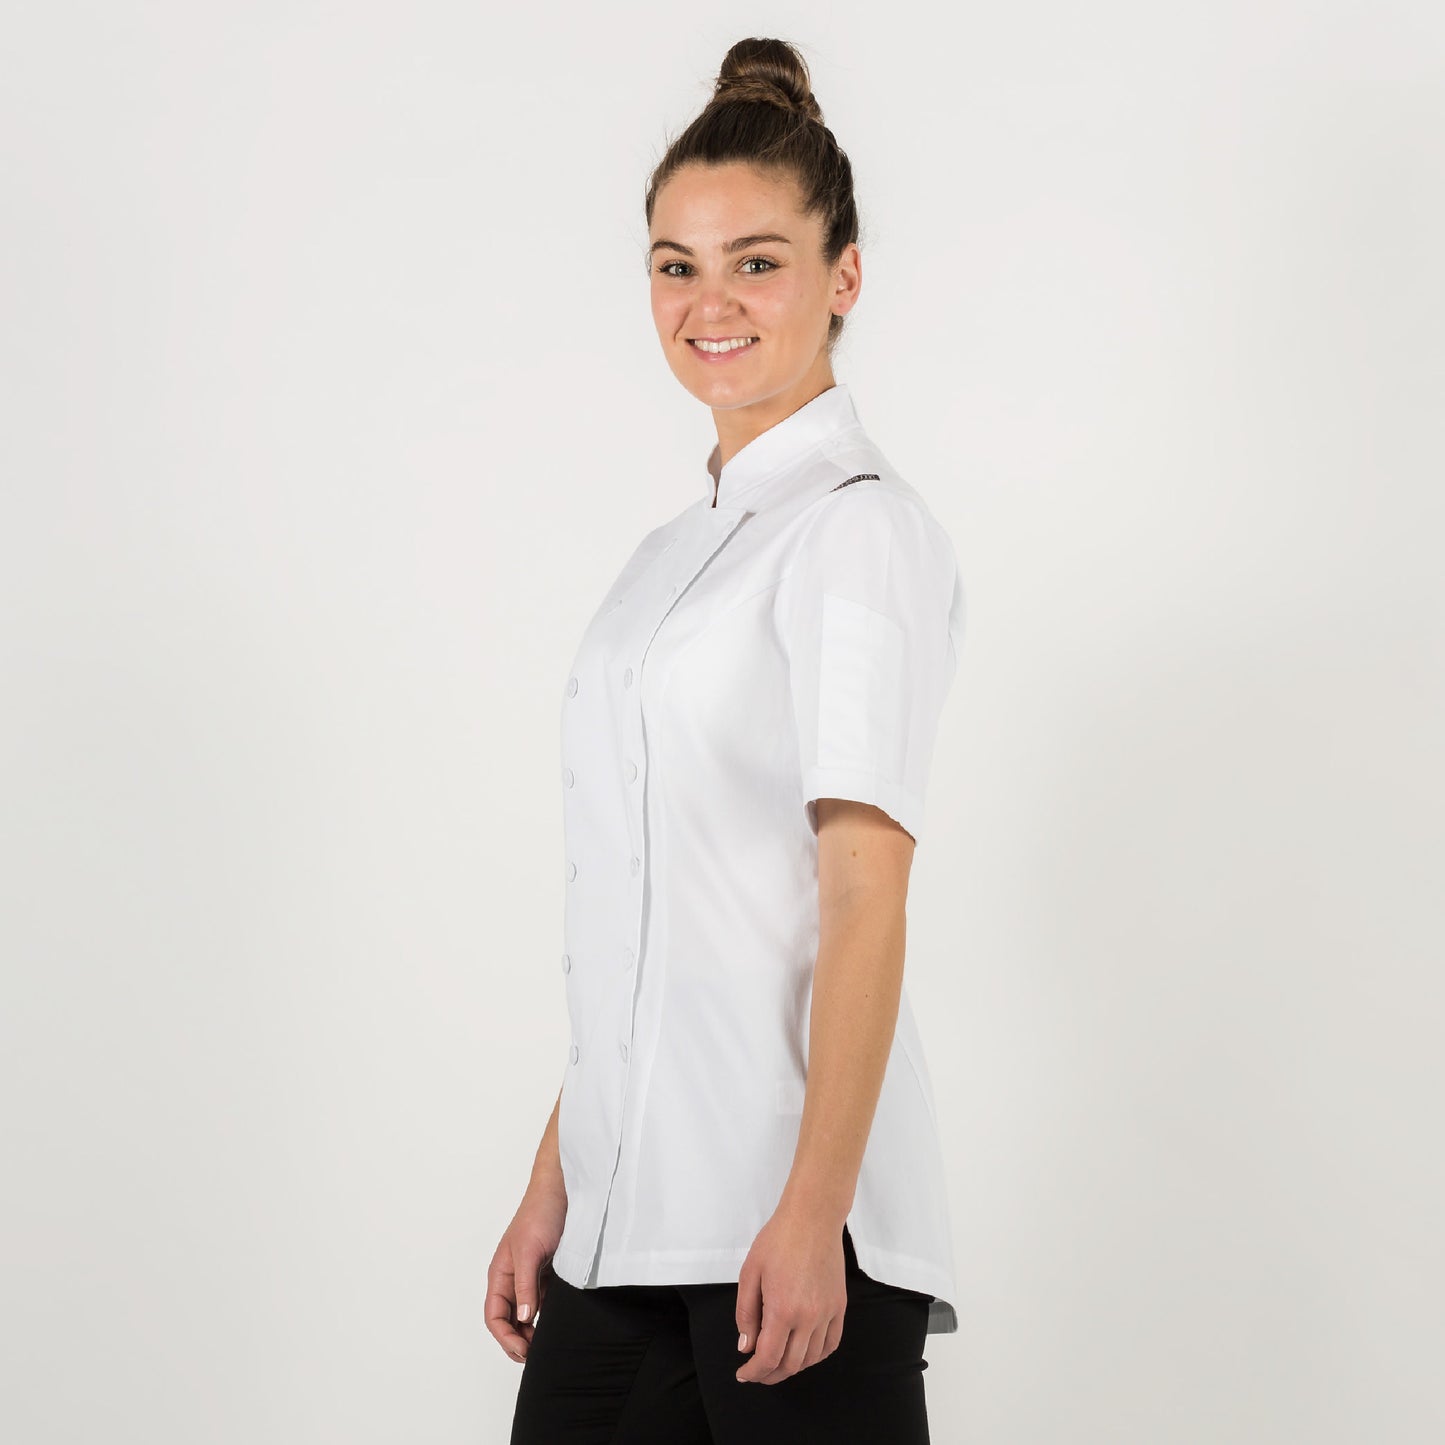 Ladies PREMIUM white chef jacket with short sleeves, Organic cotton